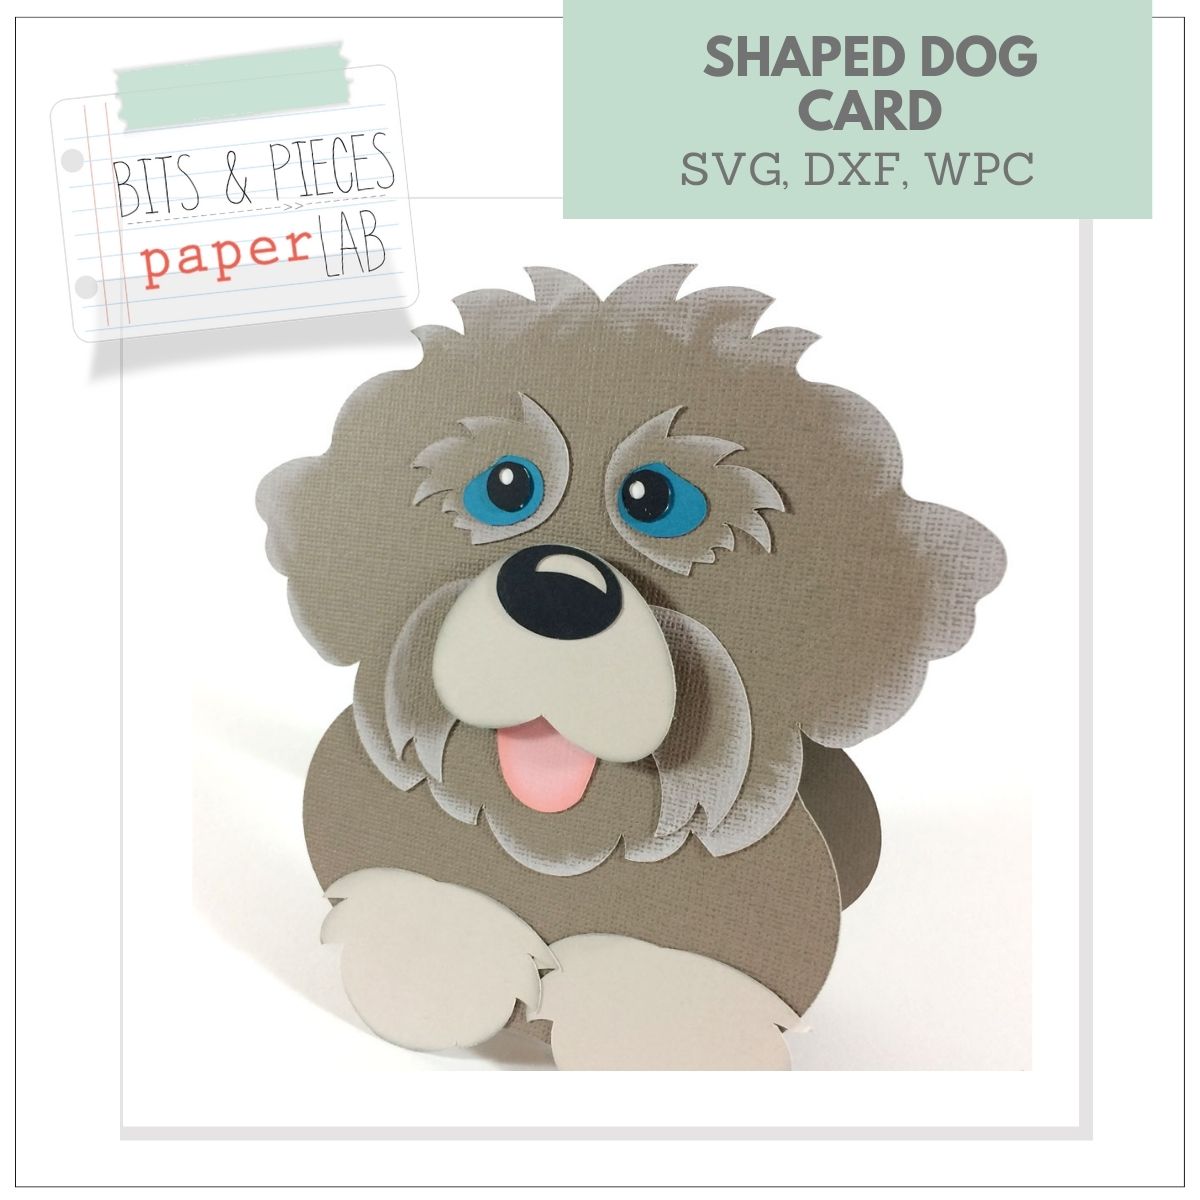 Shaped Dog Card SVG for dog lovers